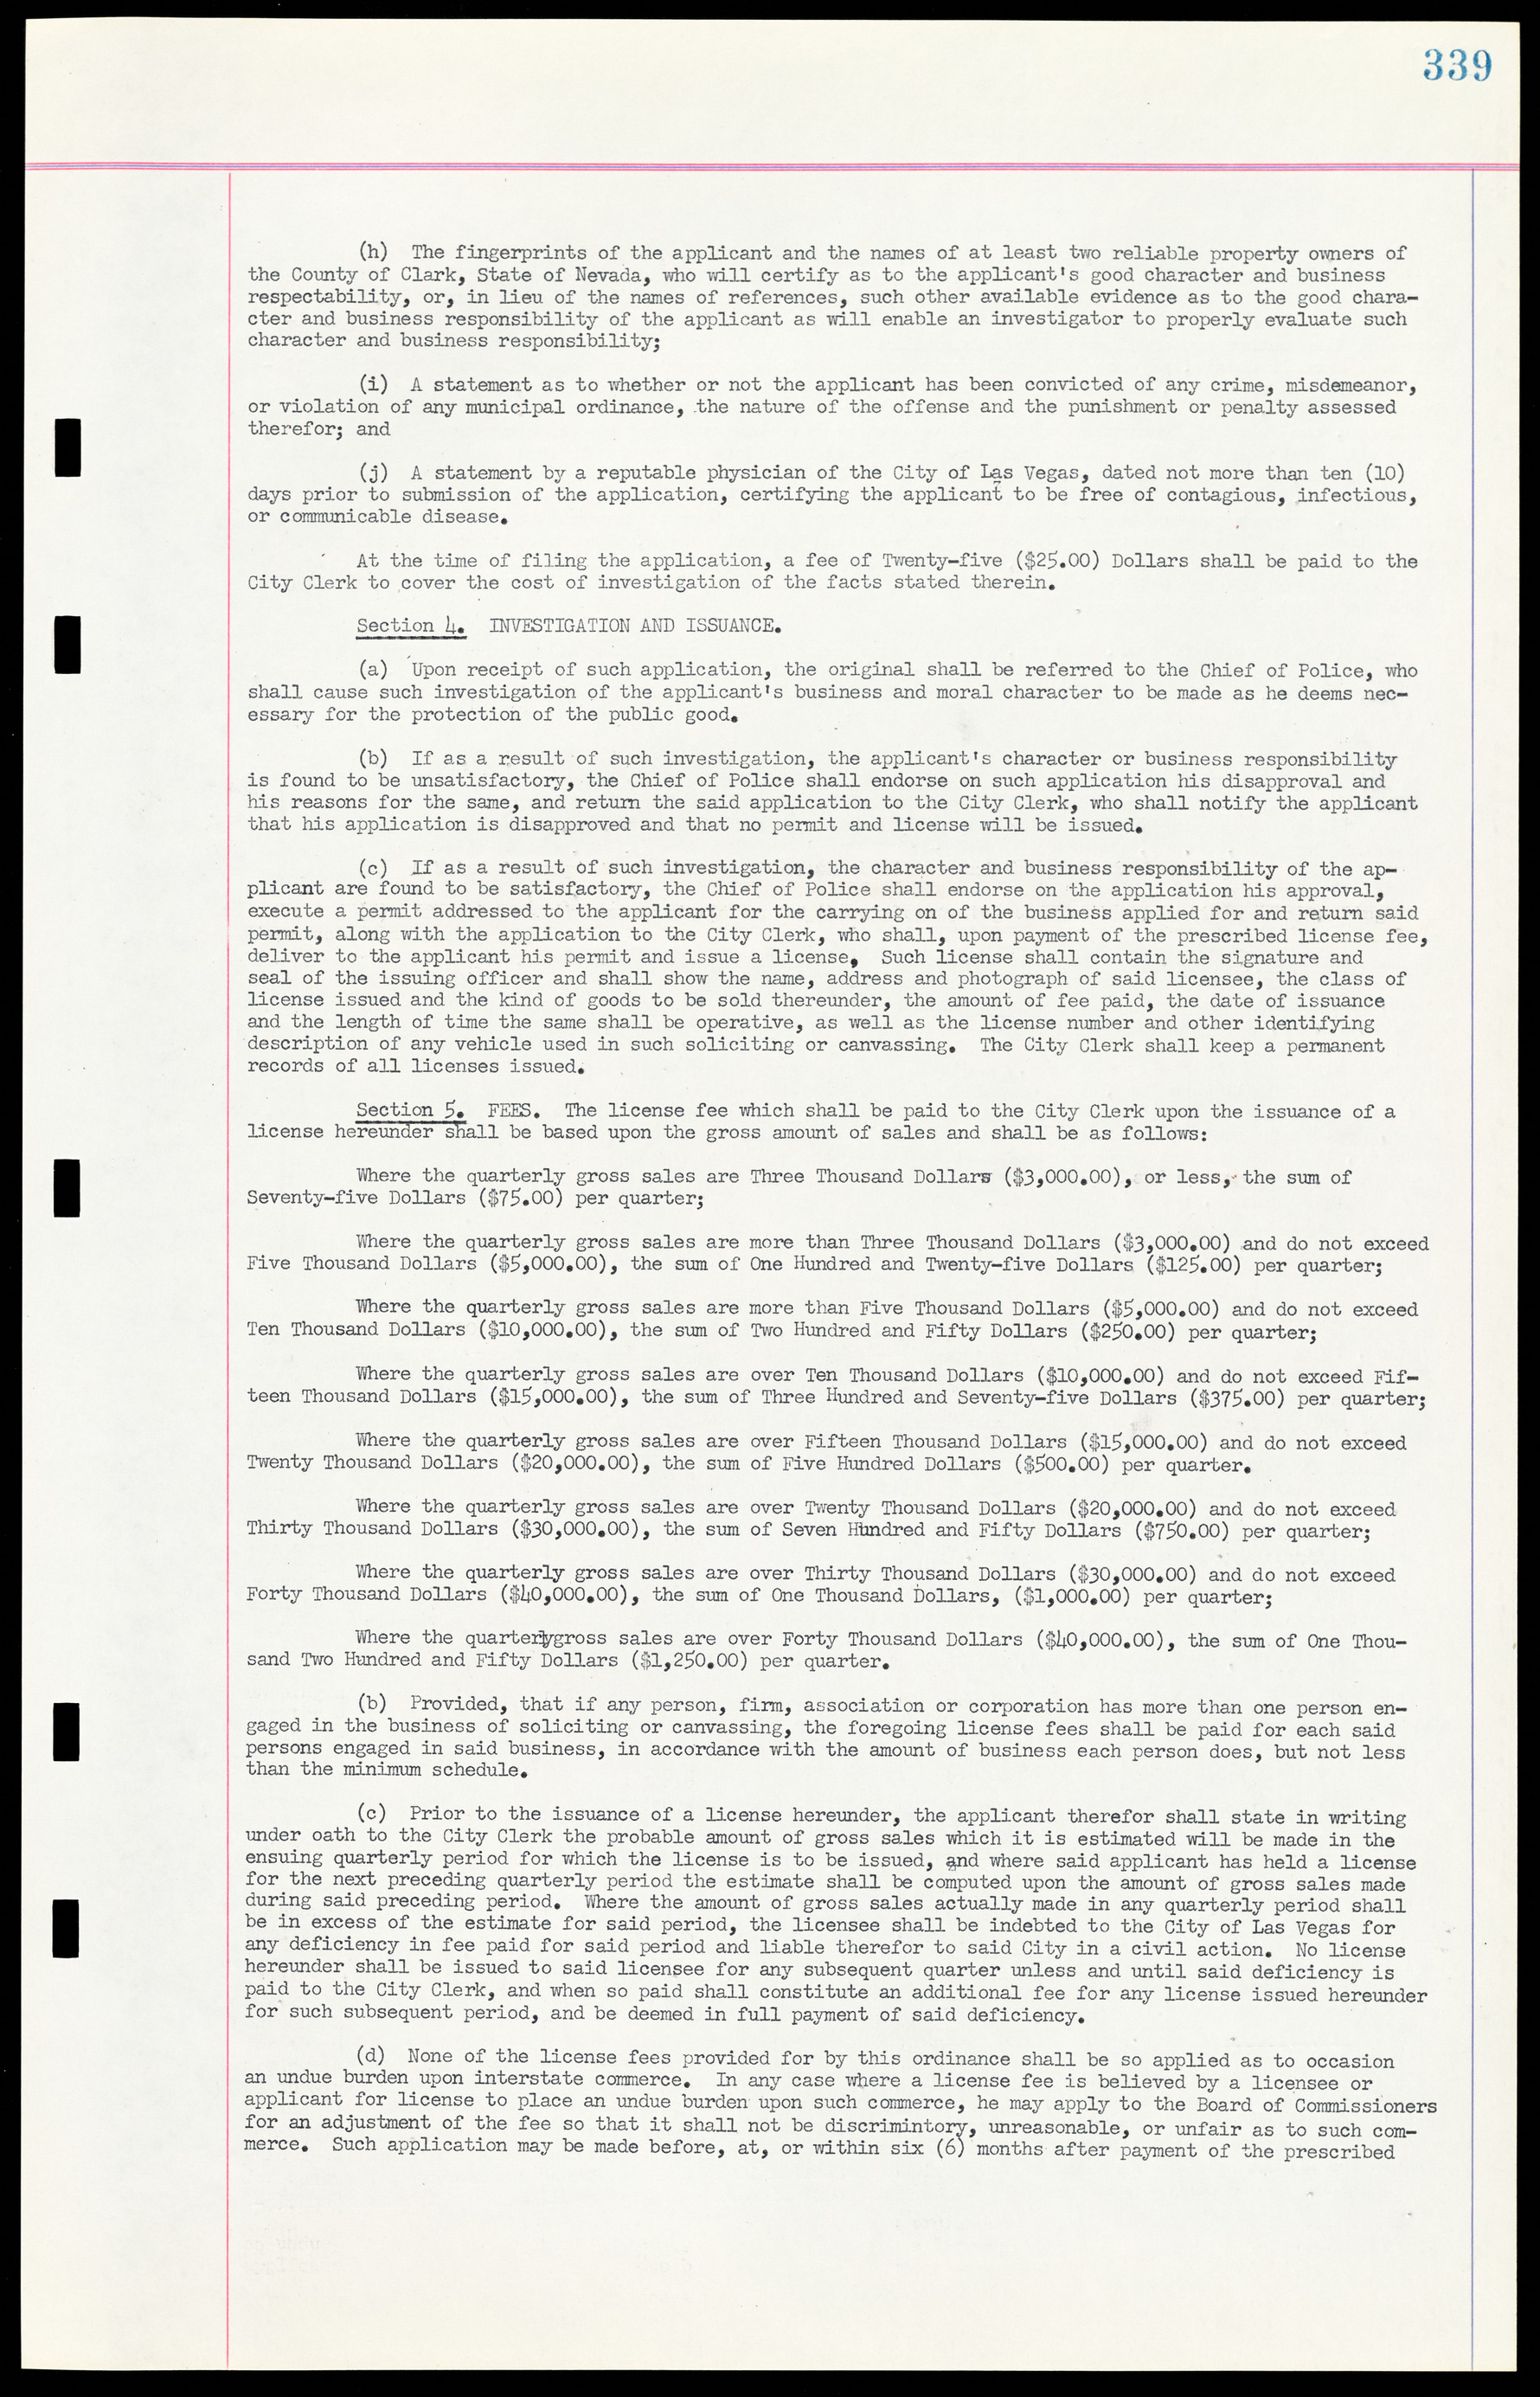 Las Vegas City Ordinances, March 31, 1933 to October 25, 1950, lvc000014-368